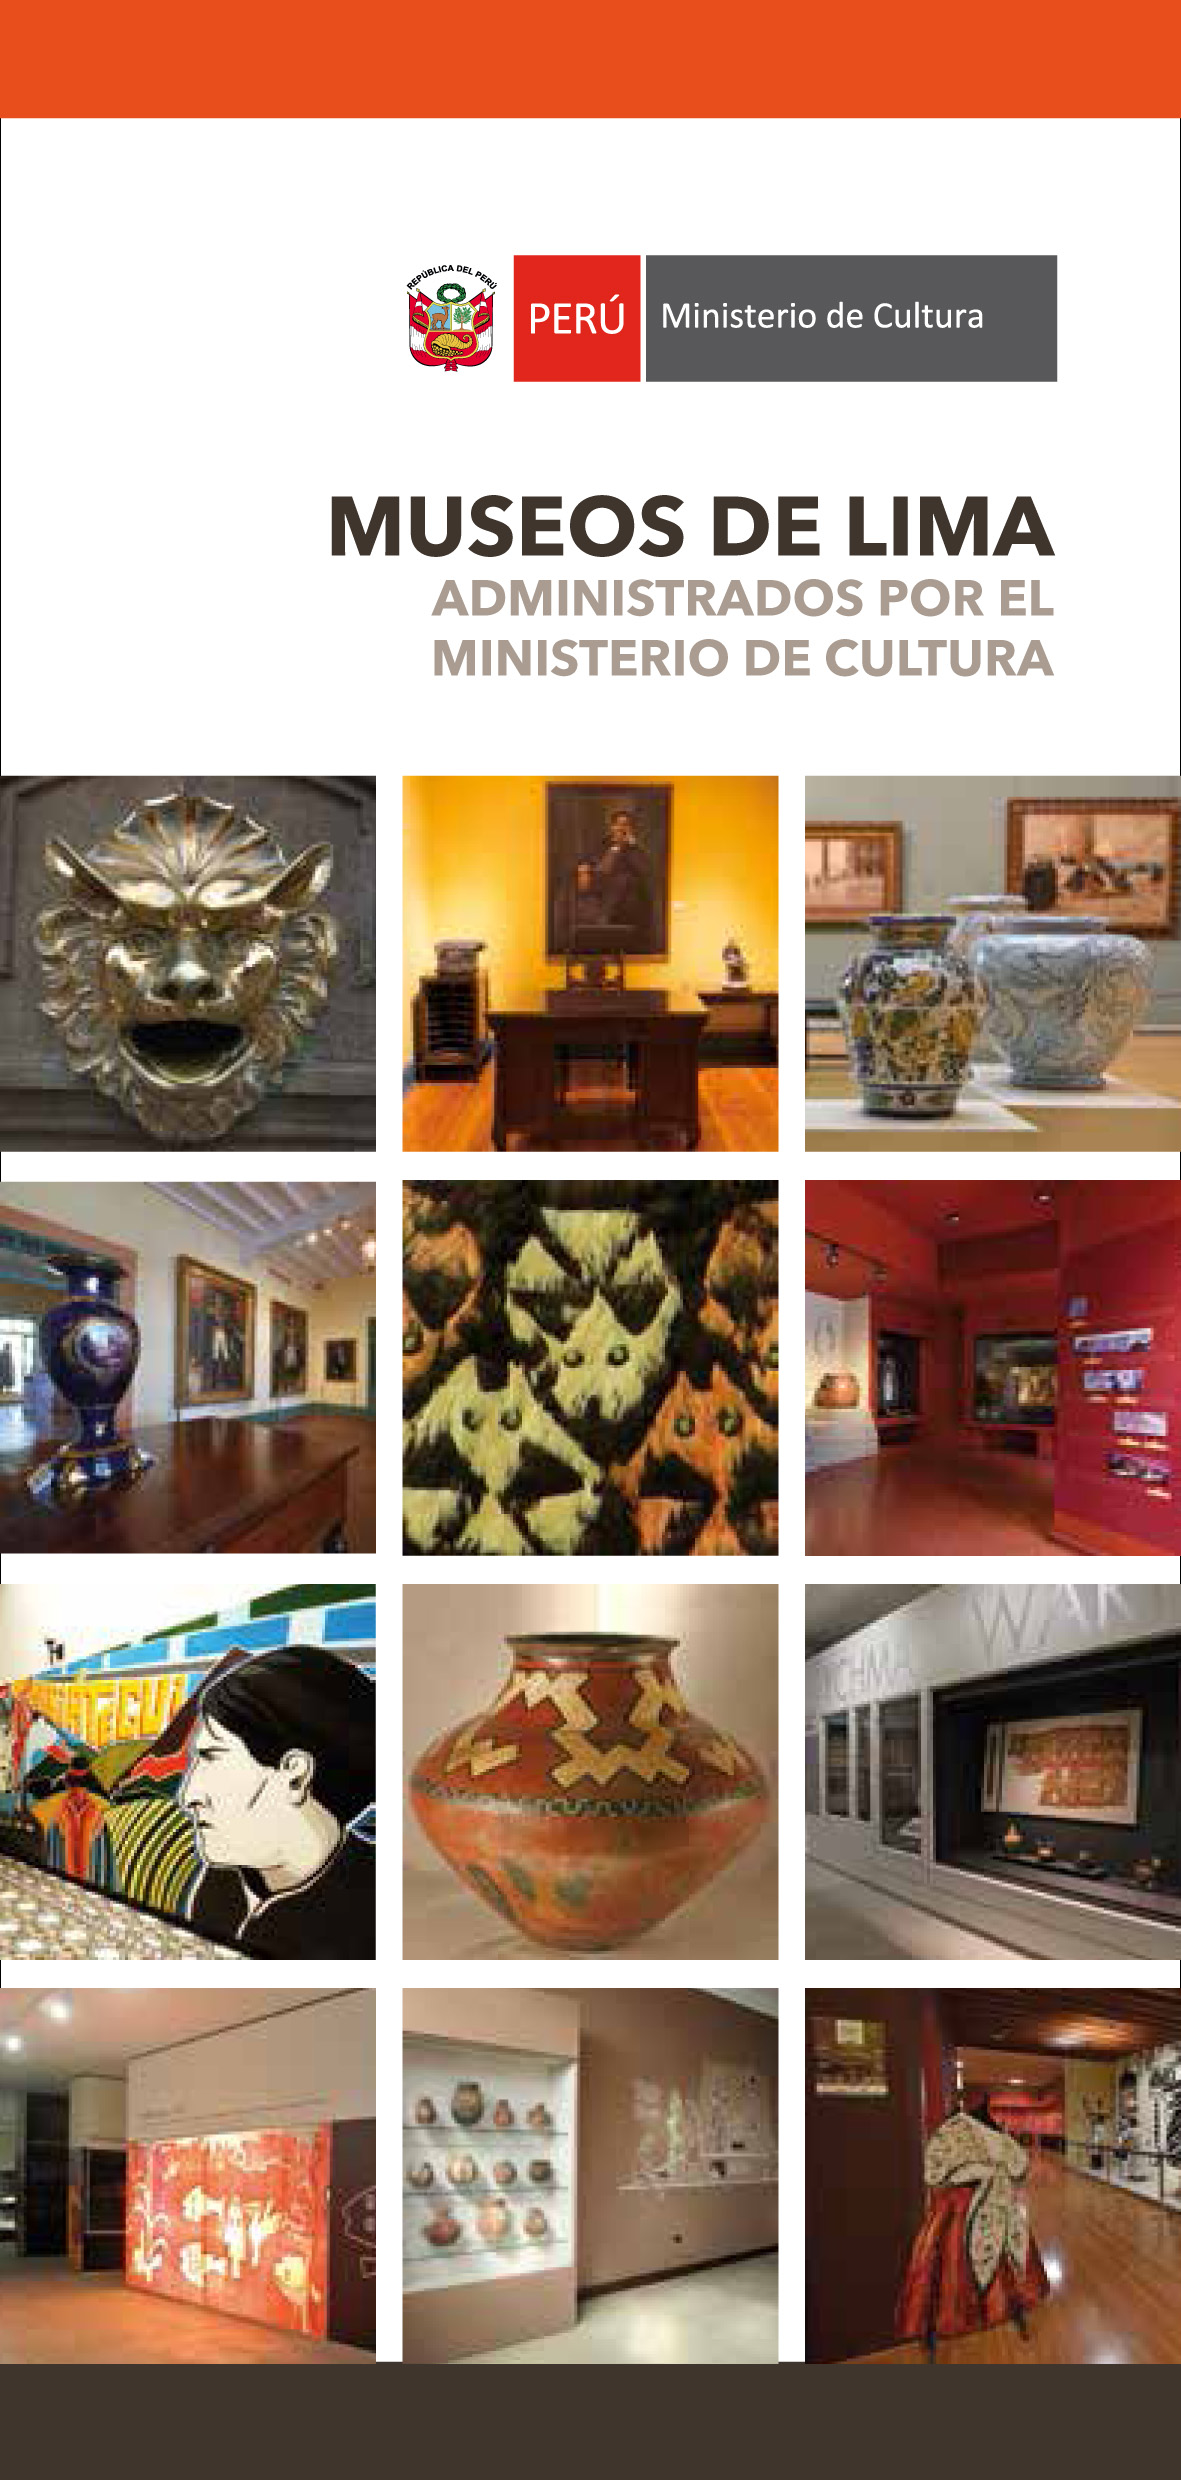 Folleto Museos de Lima 2018